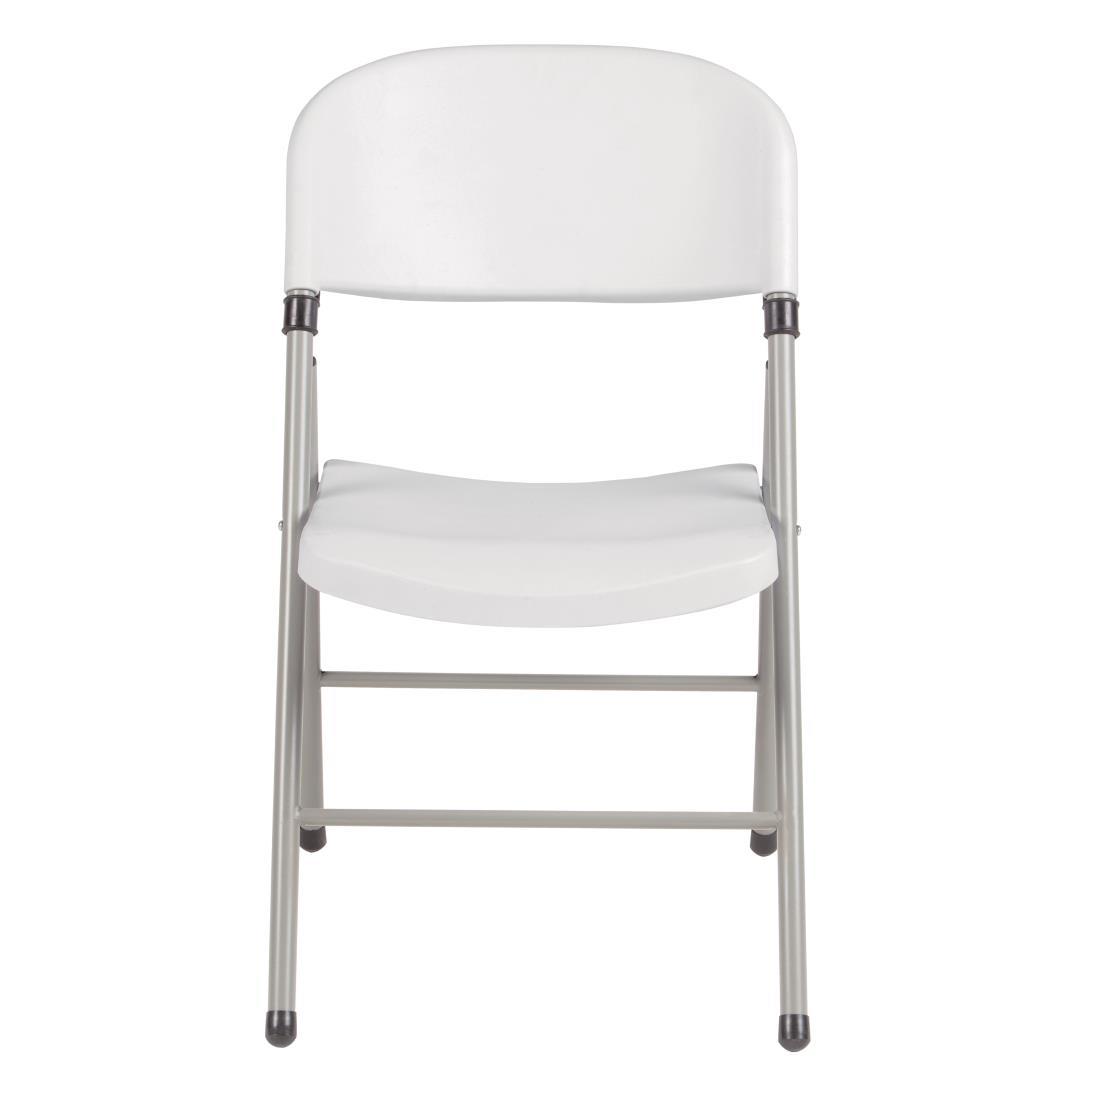 Bolero Foldaway Utility Chairs White (Pack of 2) - CE692  - 6